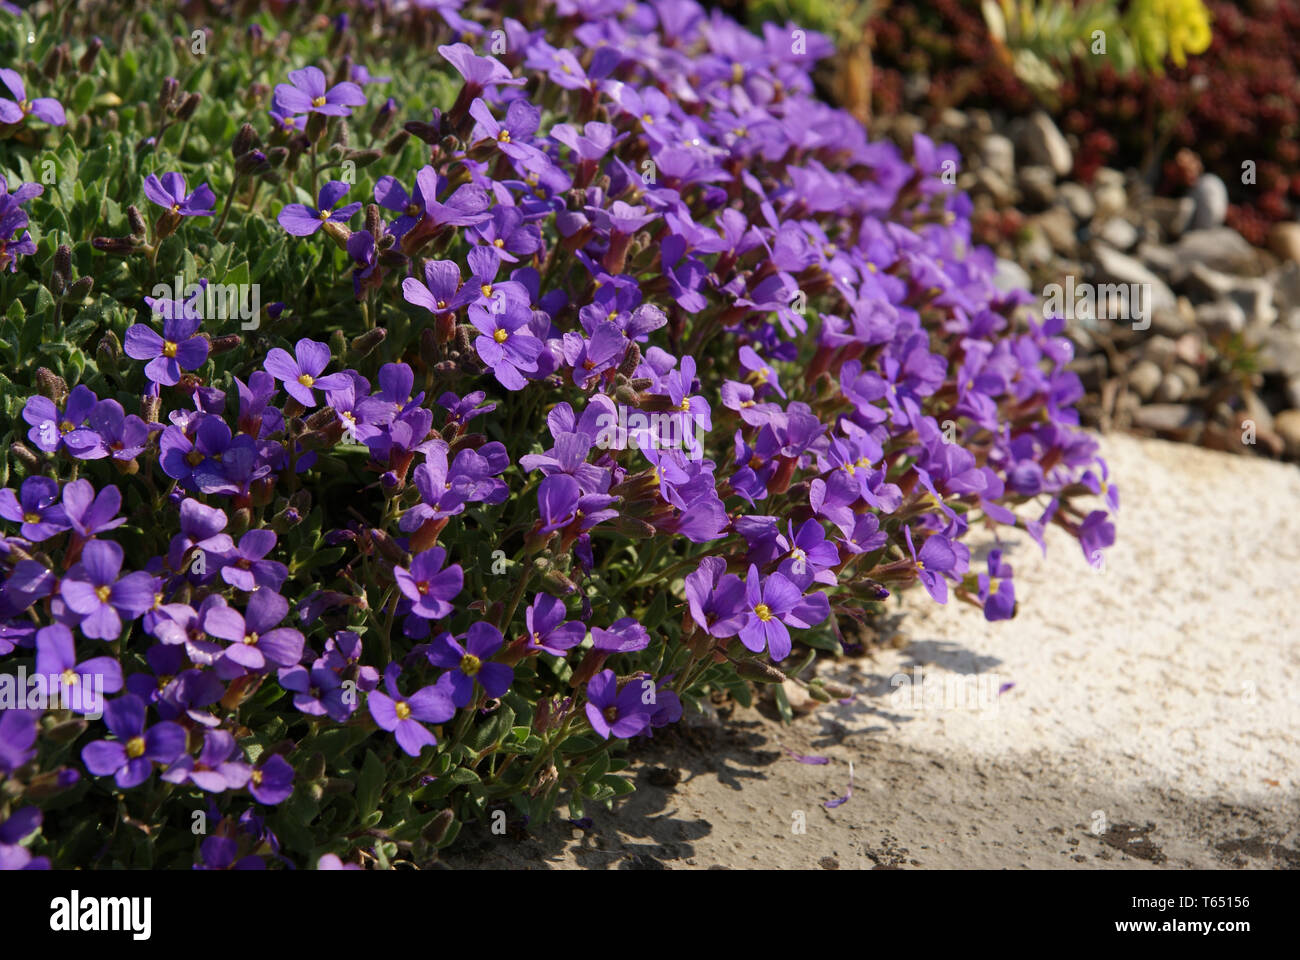 Llilacbush, purple rock cress, Rockcress blossoms Stock Photo